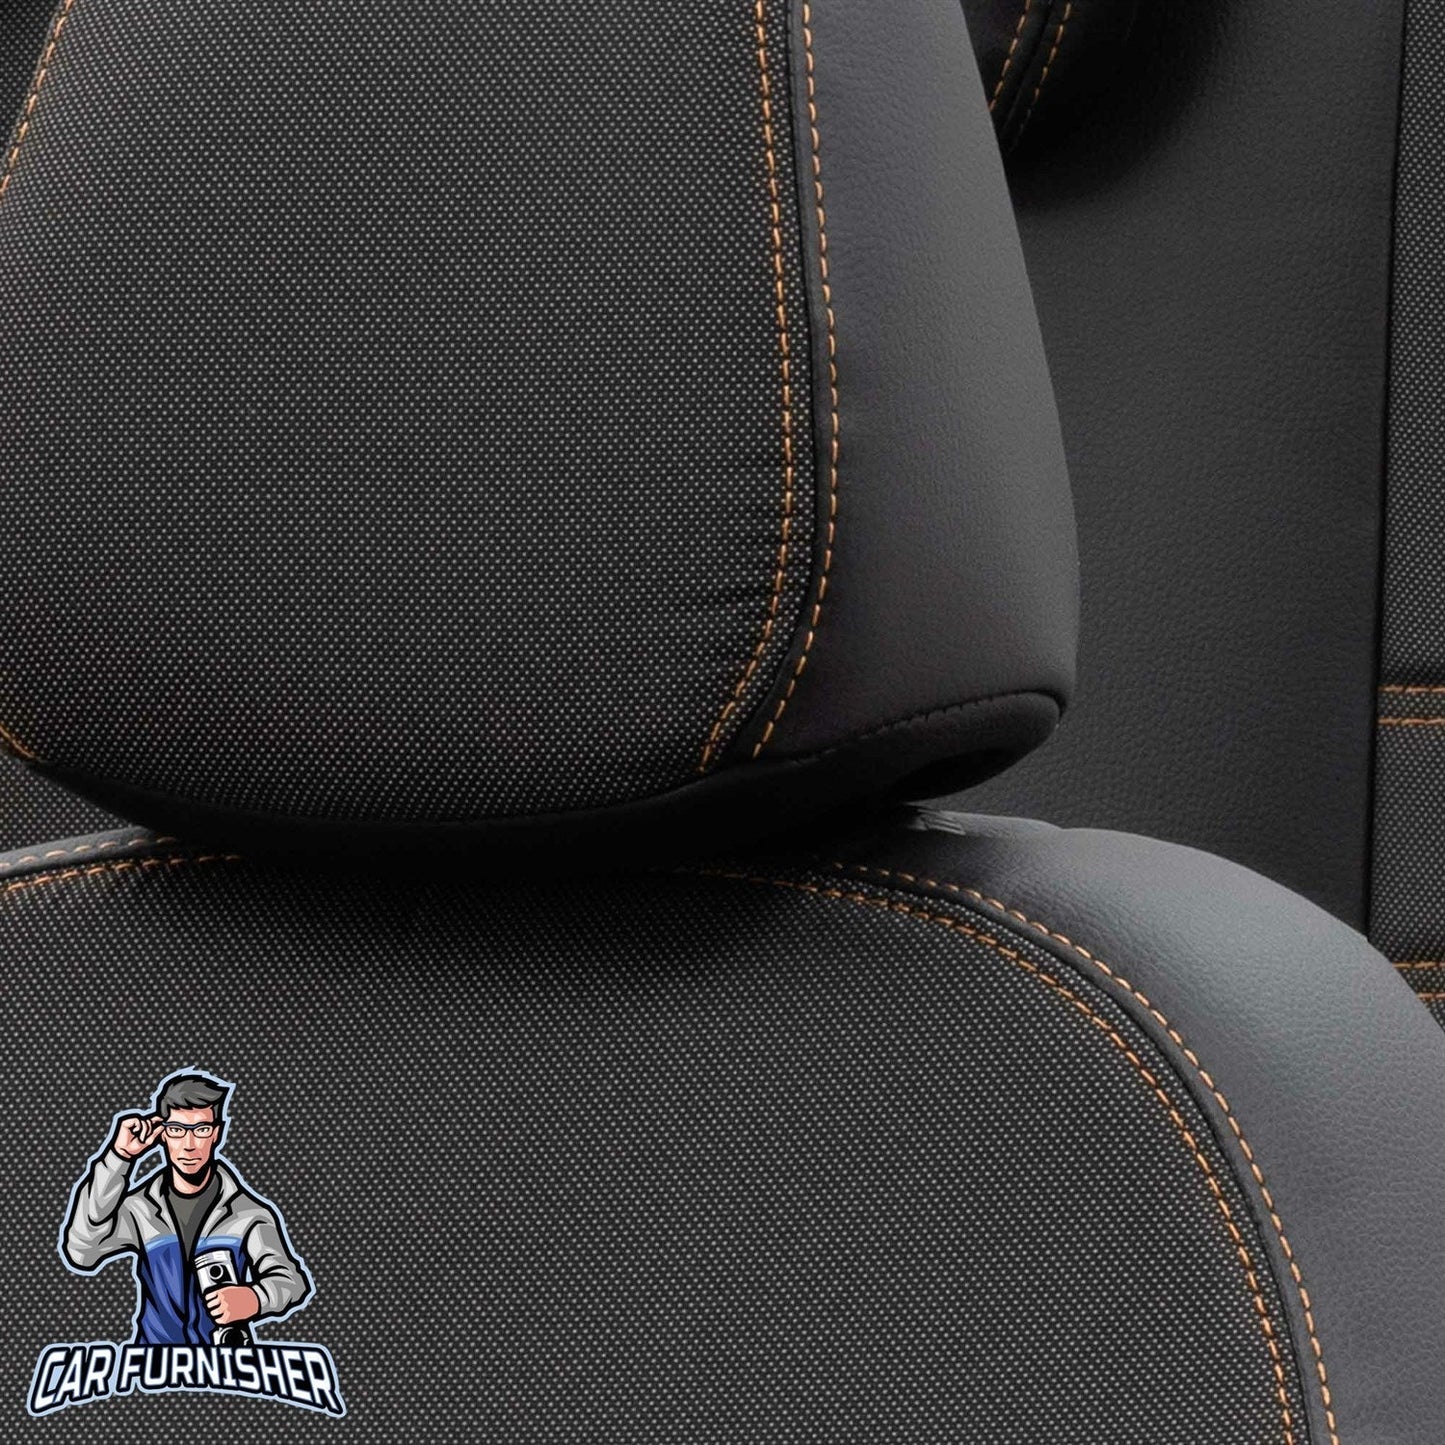 Suzuki Vitara Seat Covers Paris Leather & Jacquard Design Dark Beige Leather & Jacquard Fabric